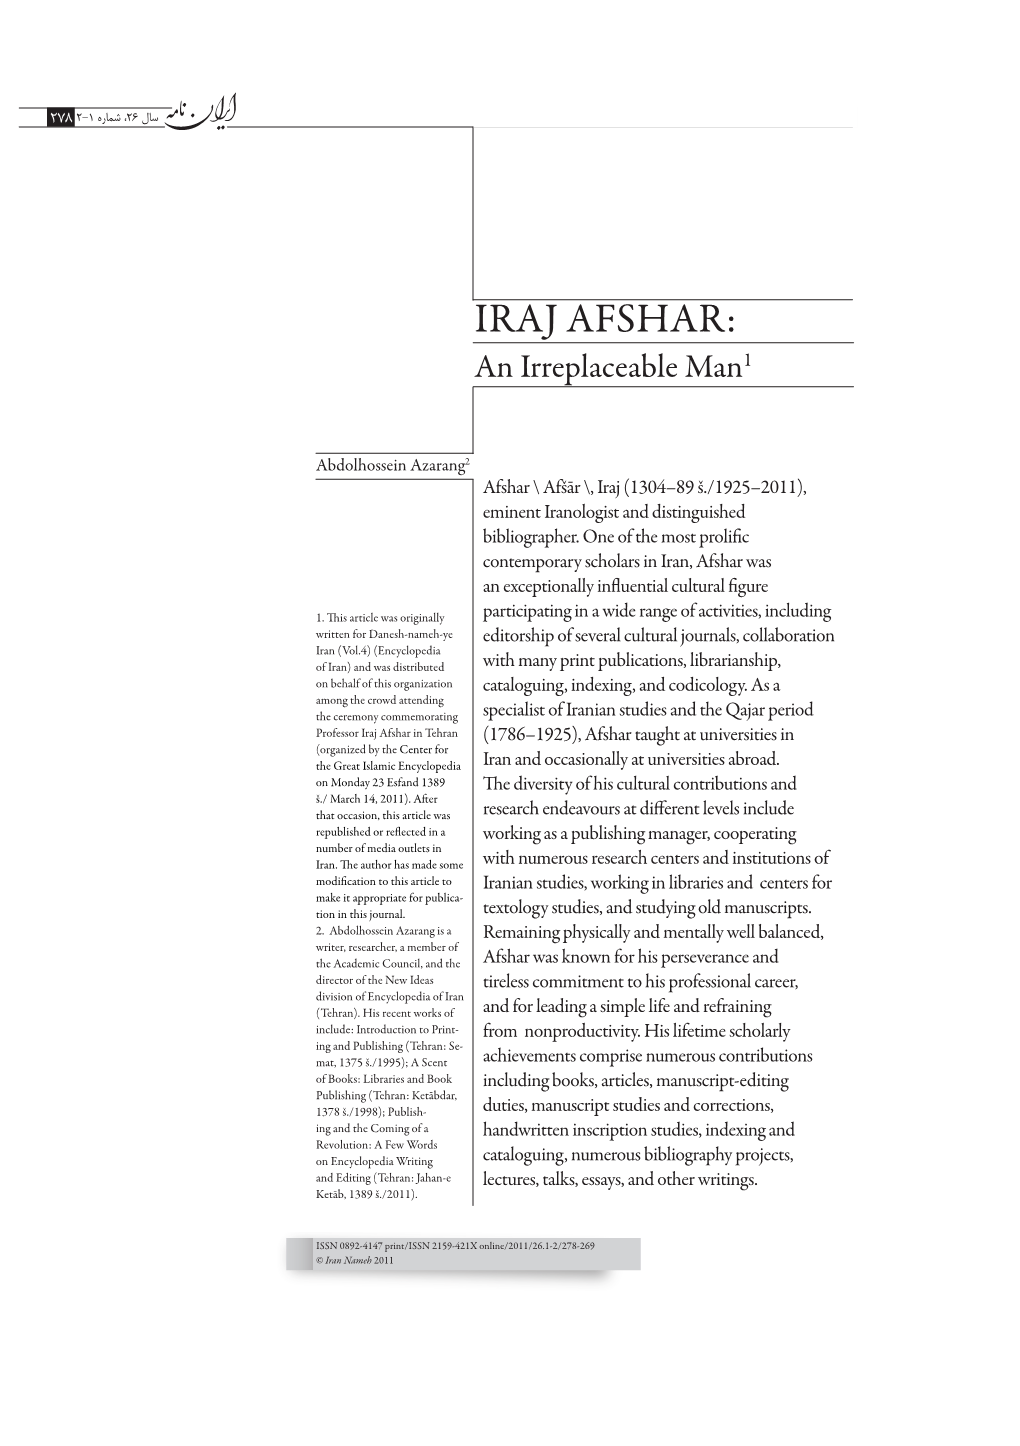 IRAJ AFSHAR: an Irreplaceable Man1